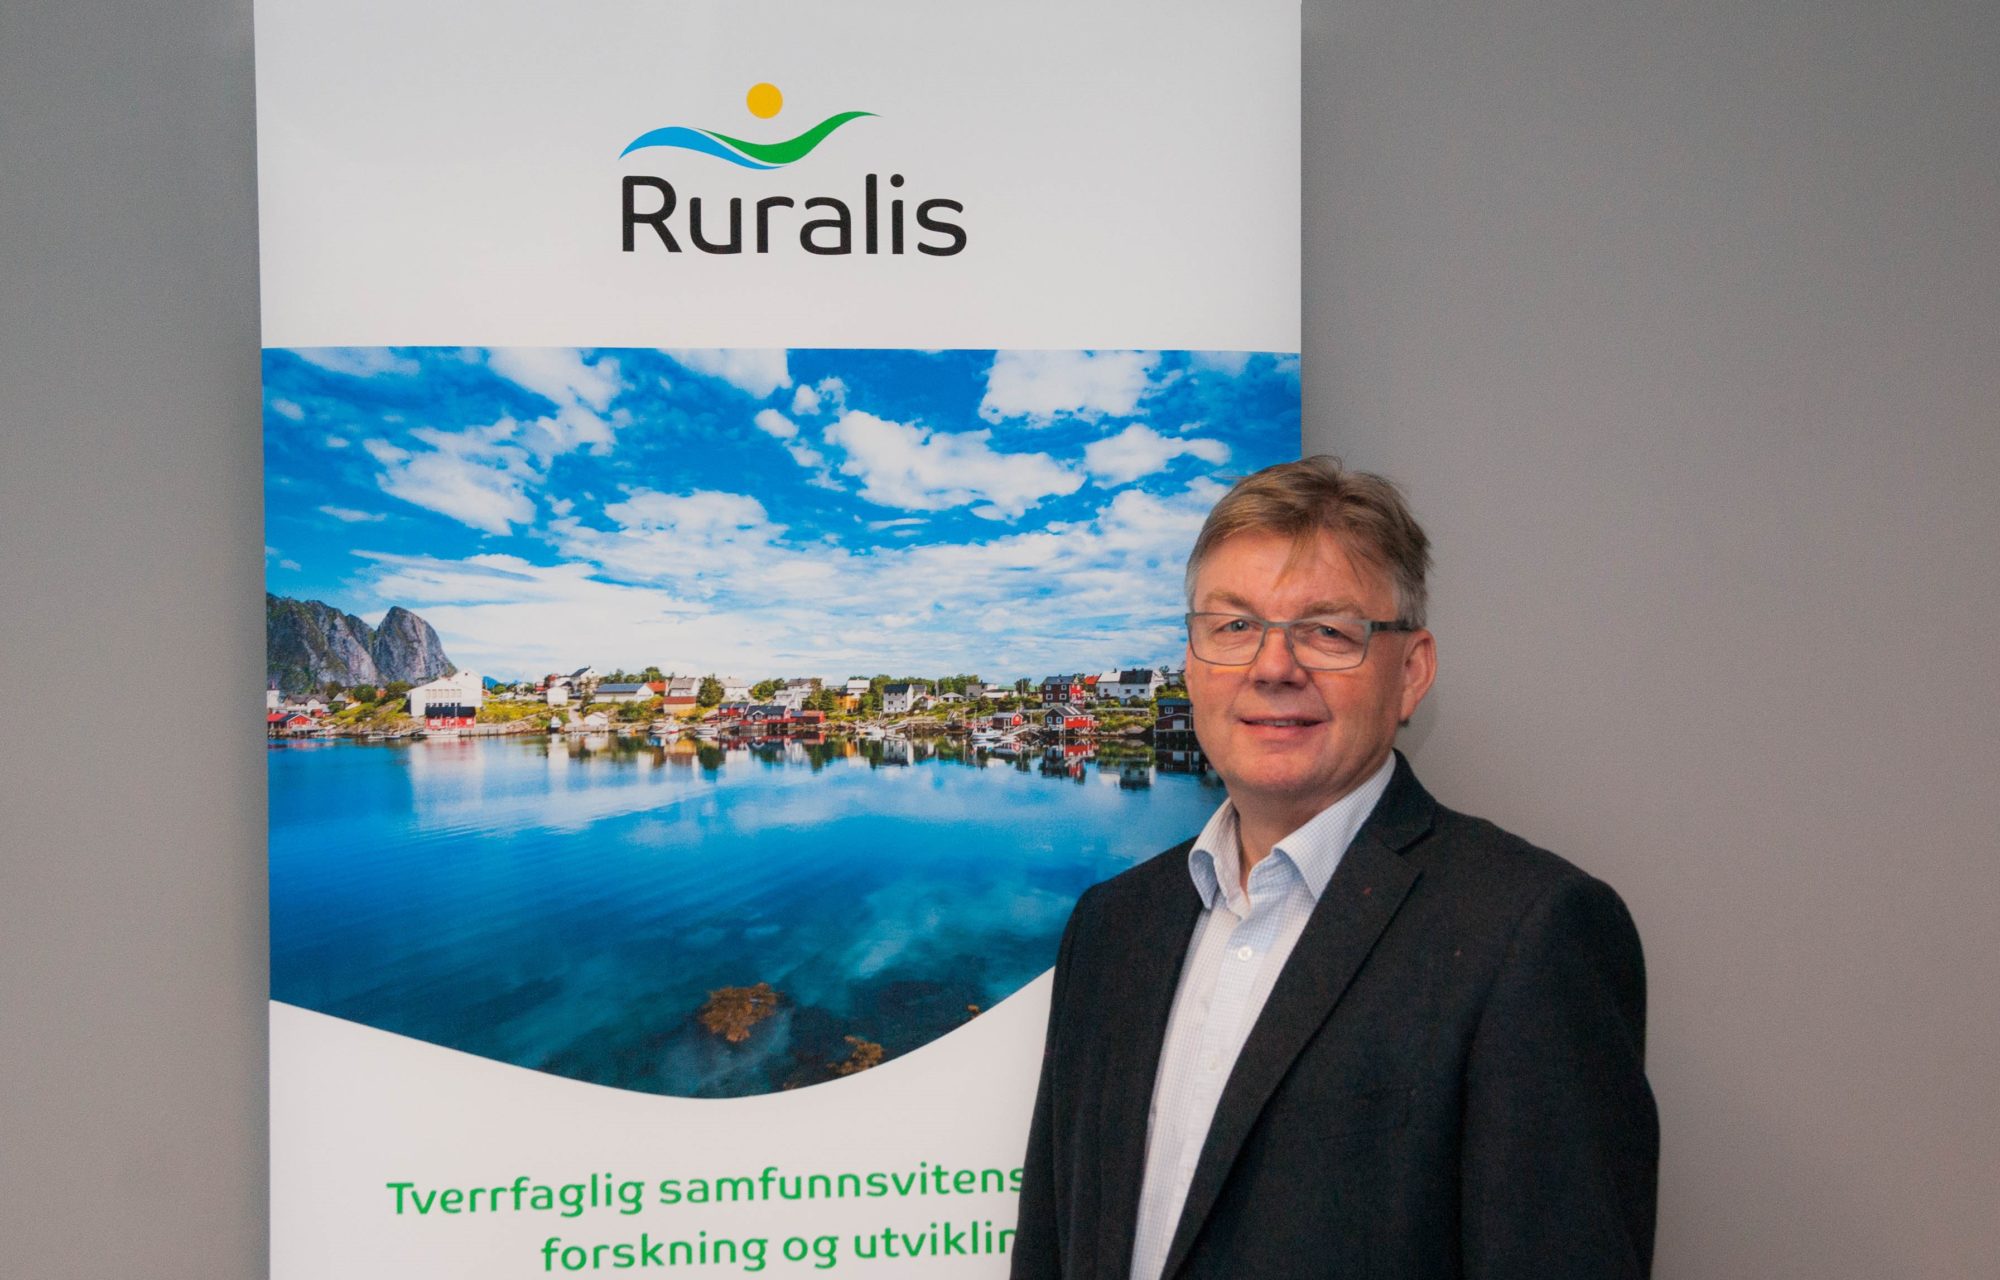 Direktør Harald A. Lein foran ny roll-up med RURALIS